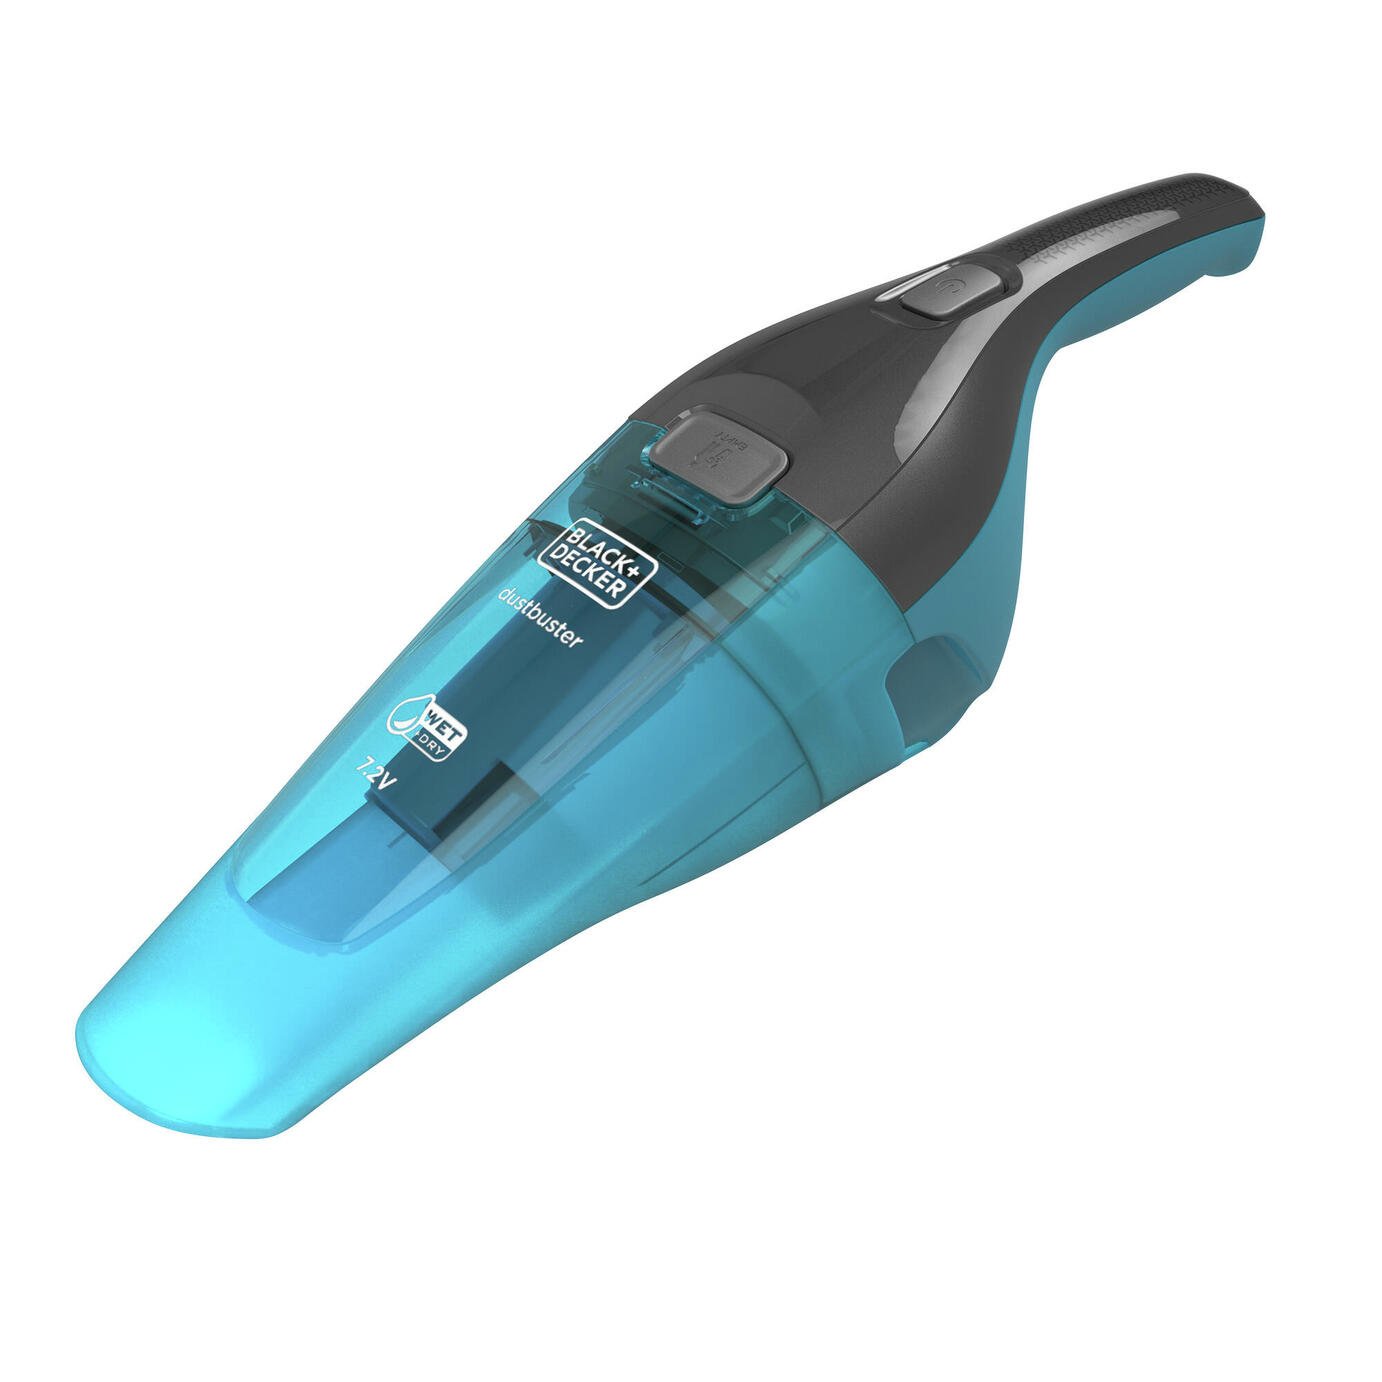 Black Decker Wet and Dry Cordless Handheld Vacuum Cleaner